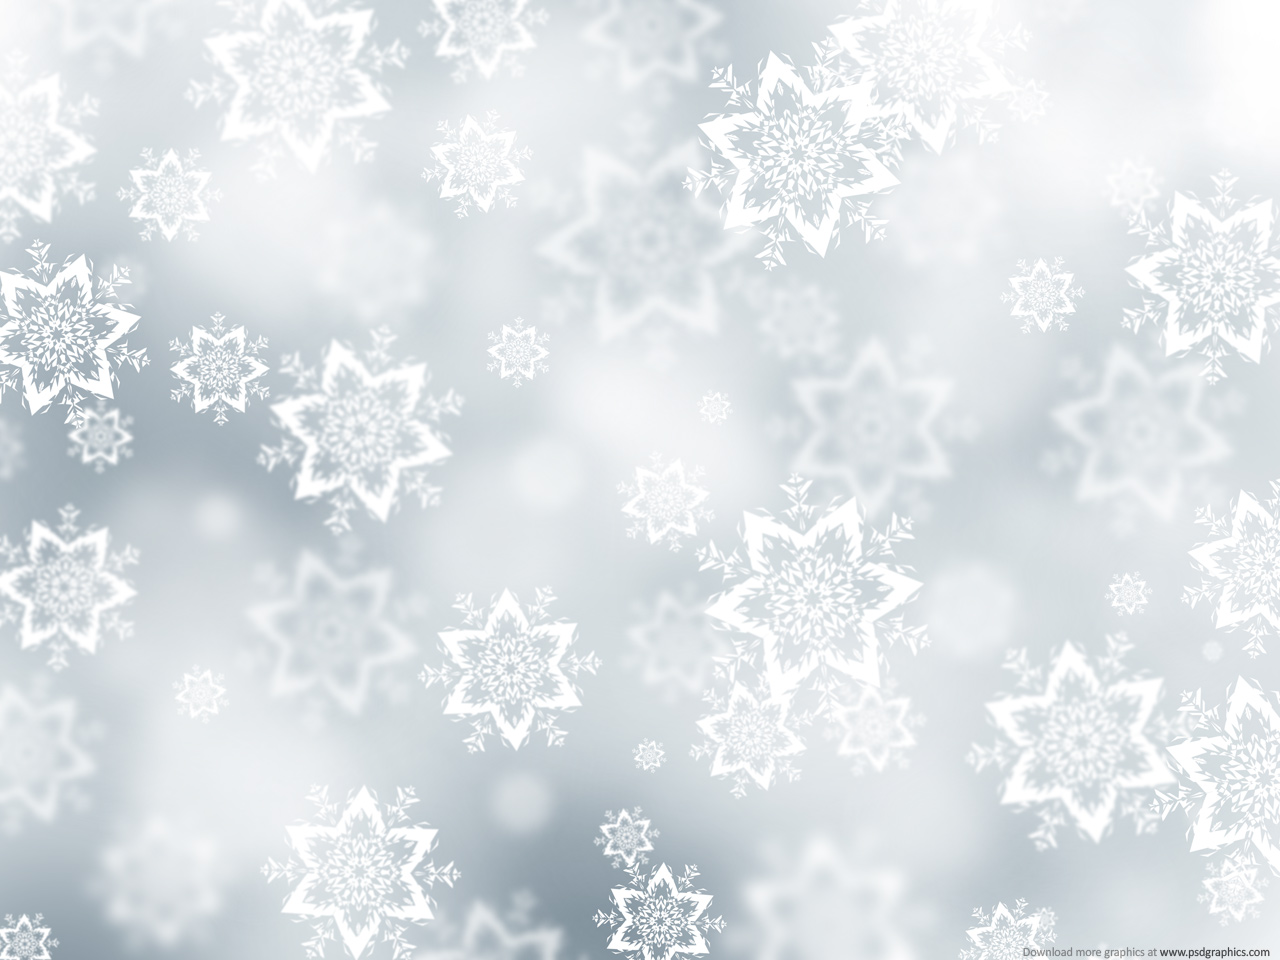 Medium Size Preview (1280x960px) Christmas Snow Art